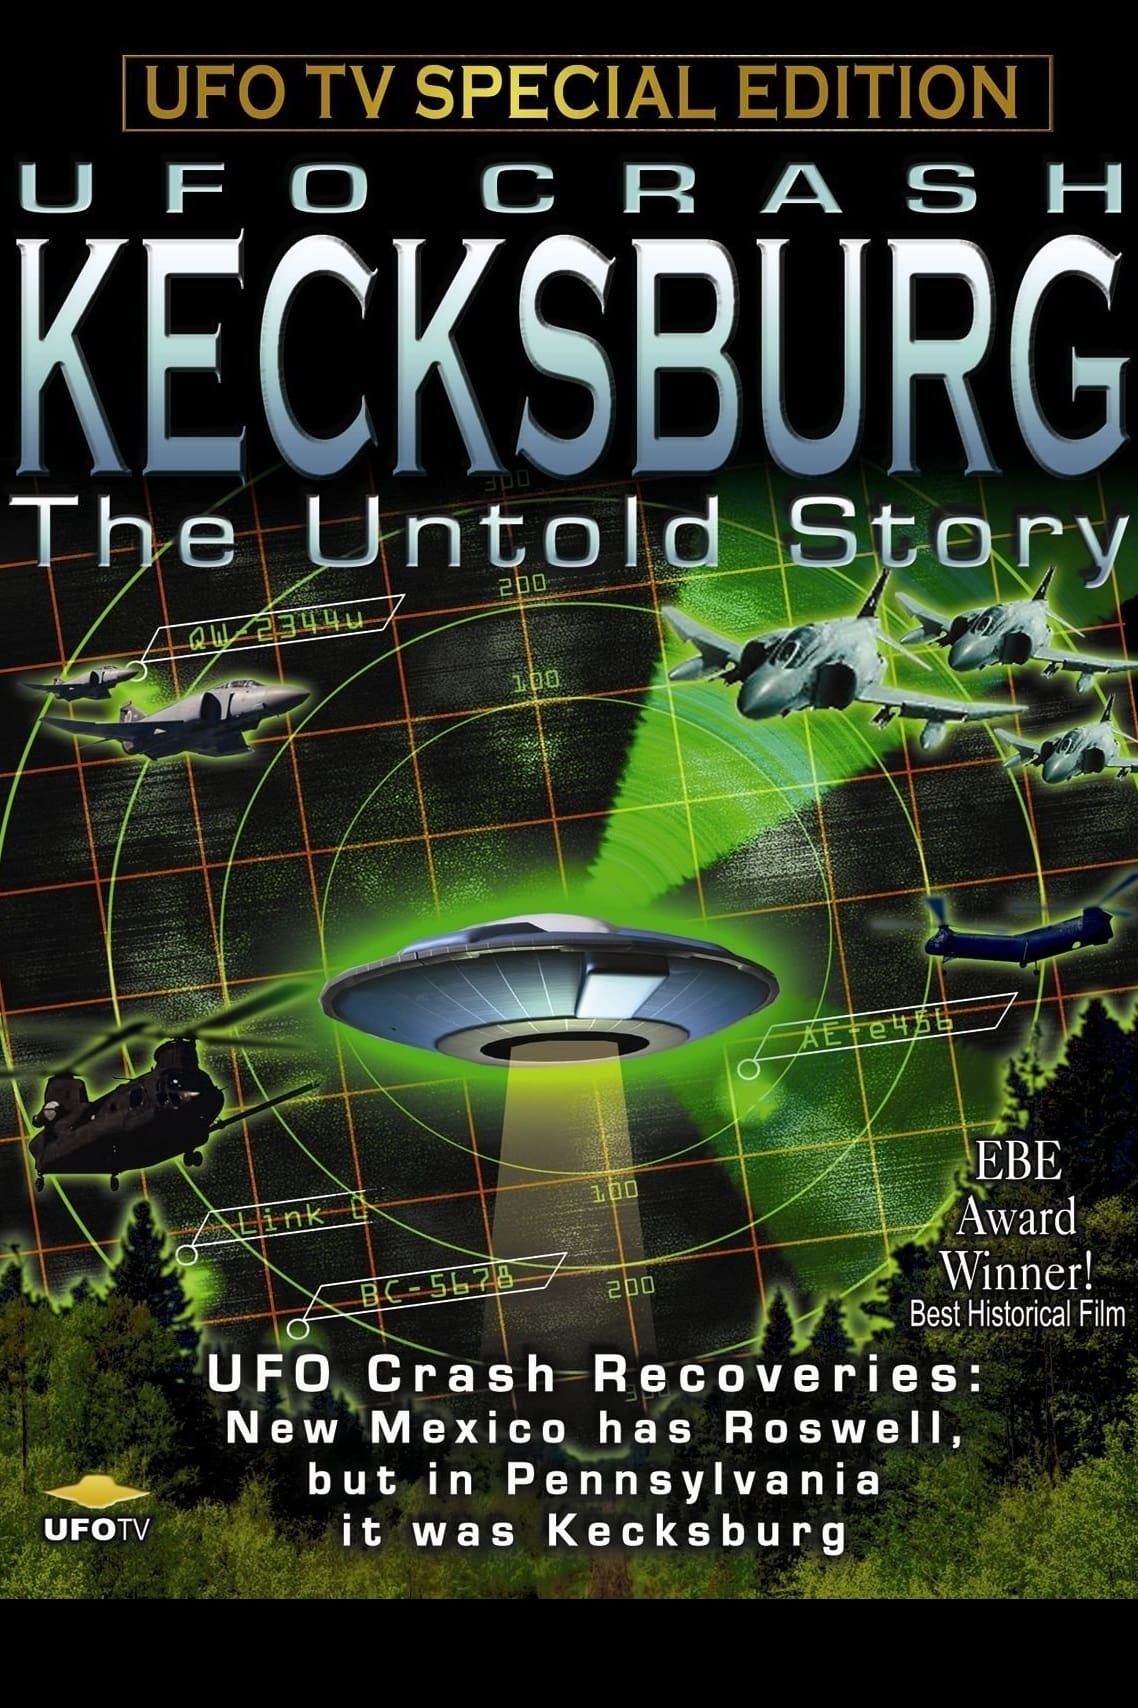 Kecksburg: The Untold Story